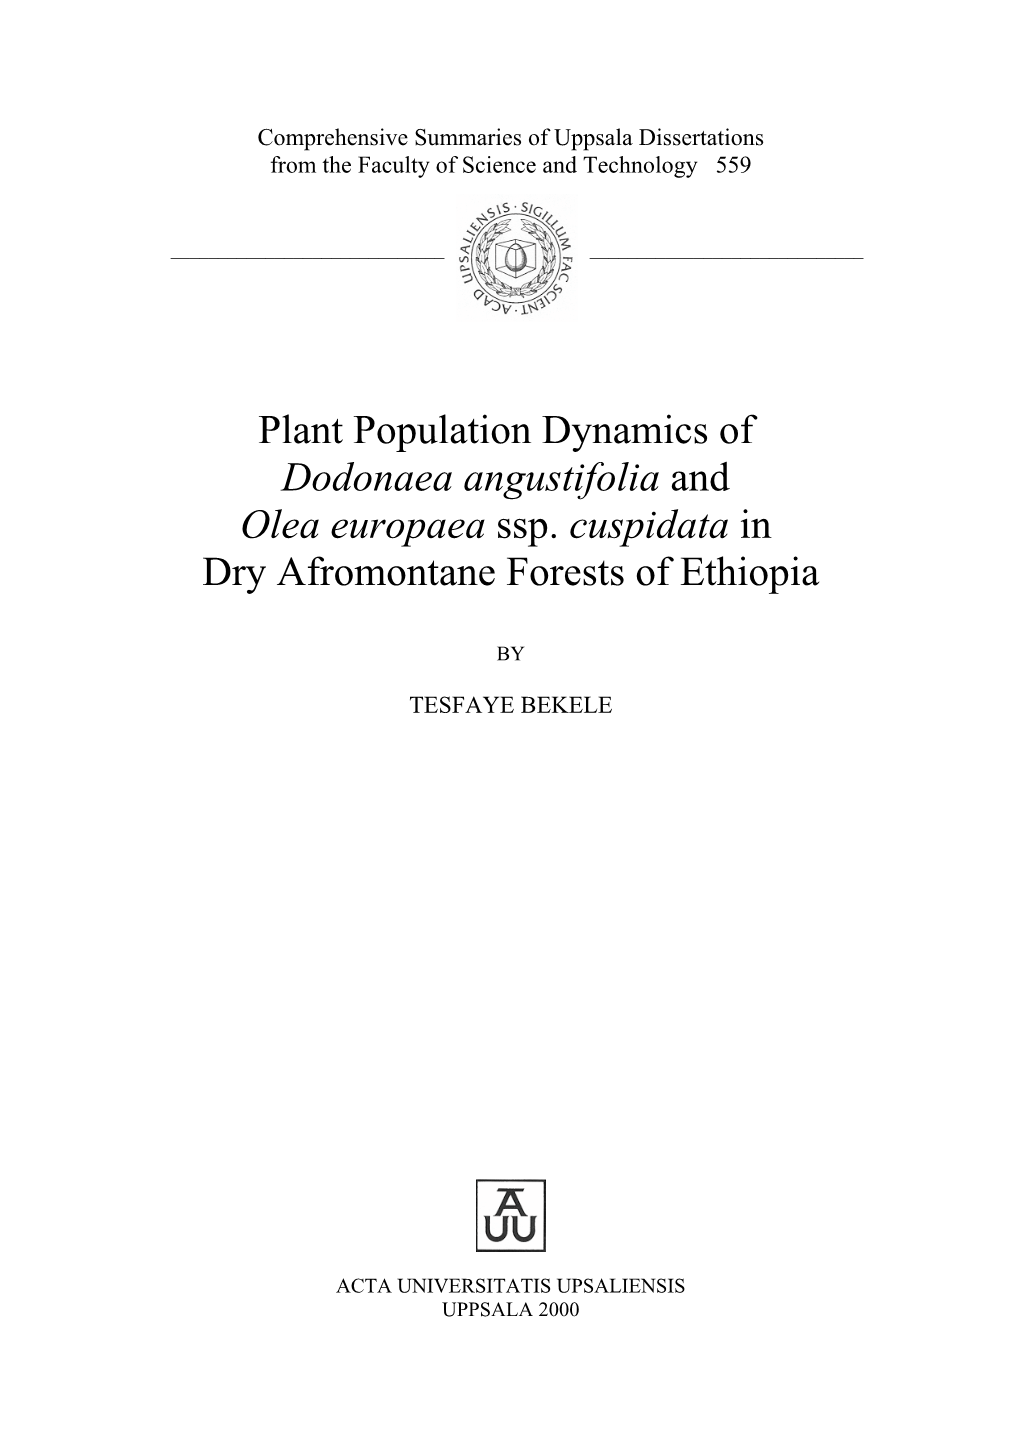 Plant Population Dynamics of Dodonaea Angustifolia and Olea Europaea Ssp